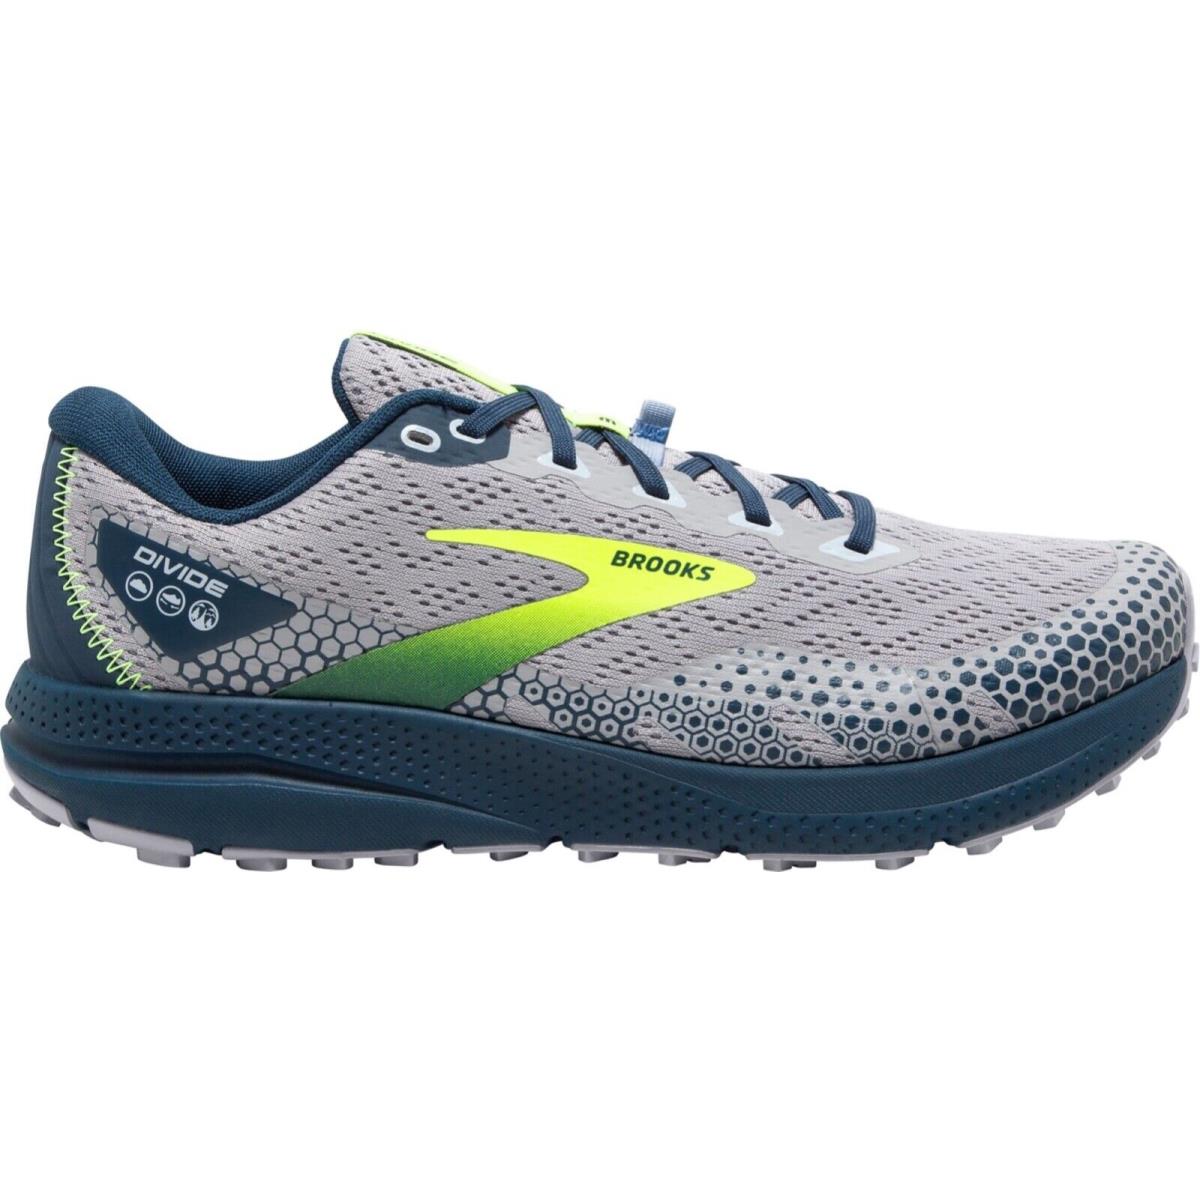 Brooks Divide 3 Grey Neon Green Blue sz 14 110381 1D 046 Trail Running Shoe Hike